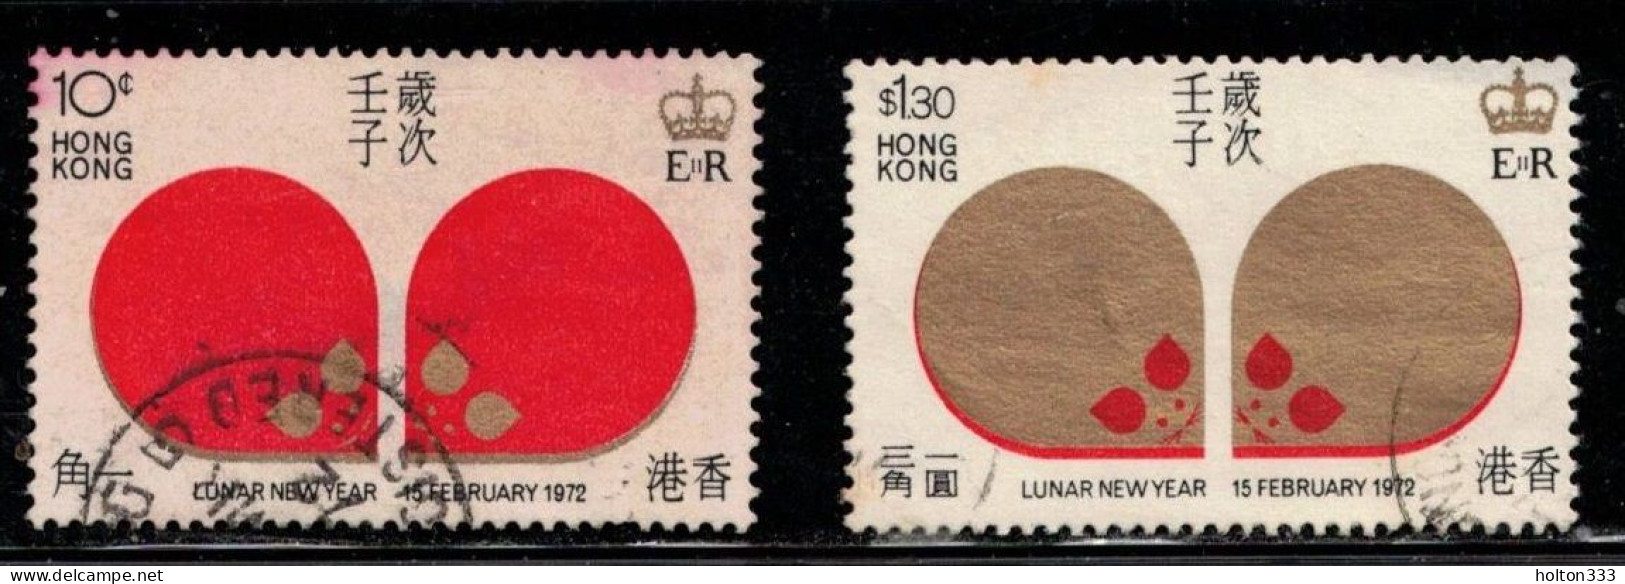 HONG KONG Scott # 268-9 Used - Lunar New Year 1972 - Usados